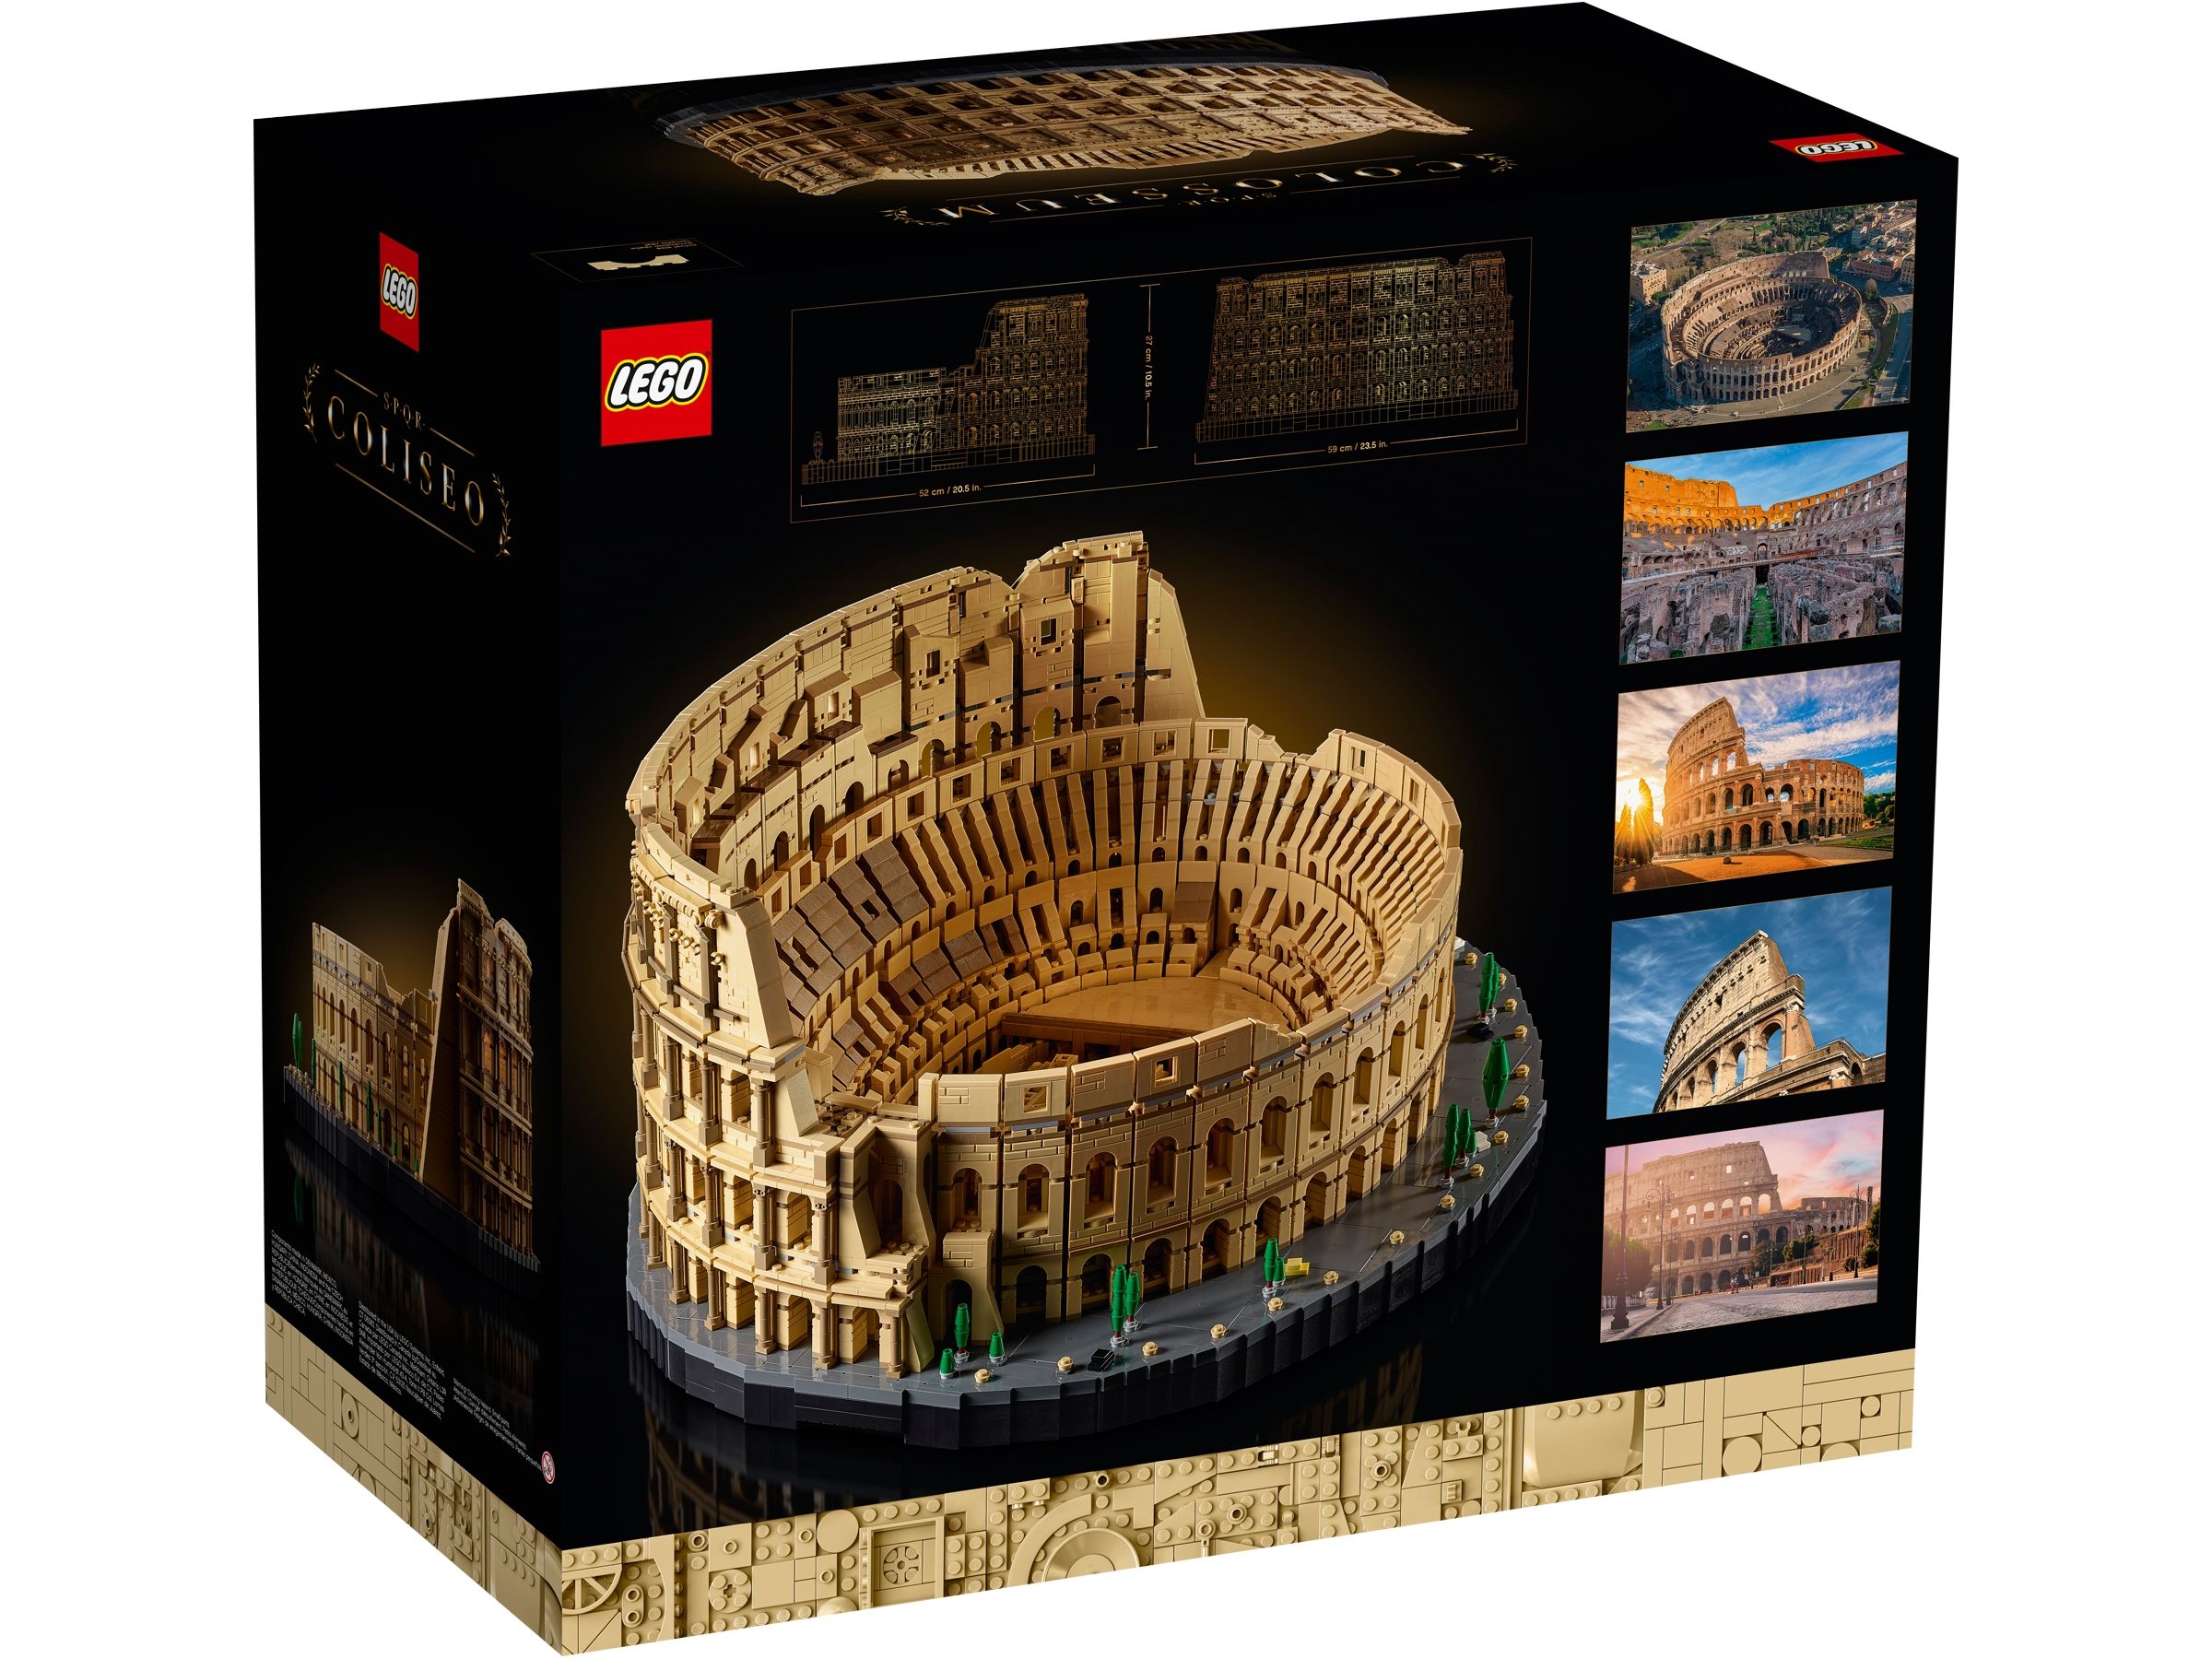 LEGO Advanced Models 10276 Kolosseum LEGO_10276_Box5_v39_2400.jpg